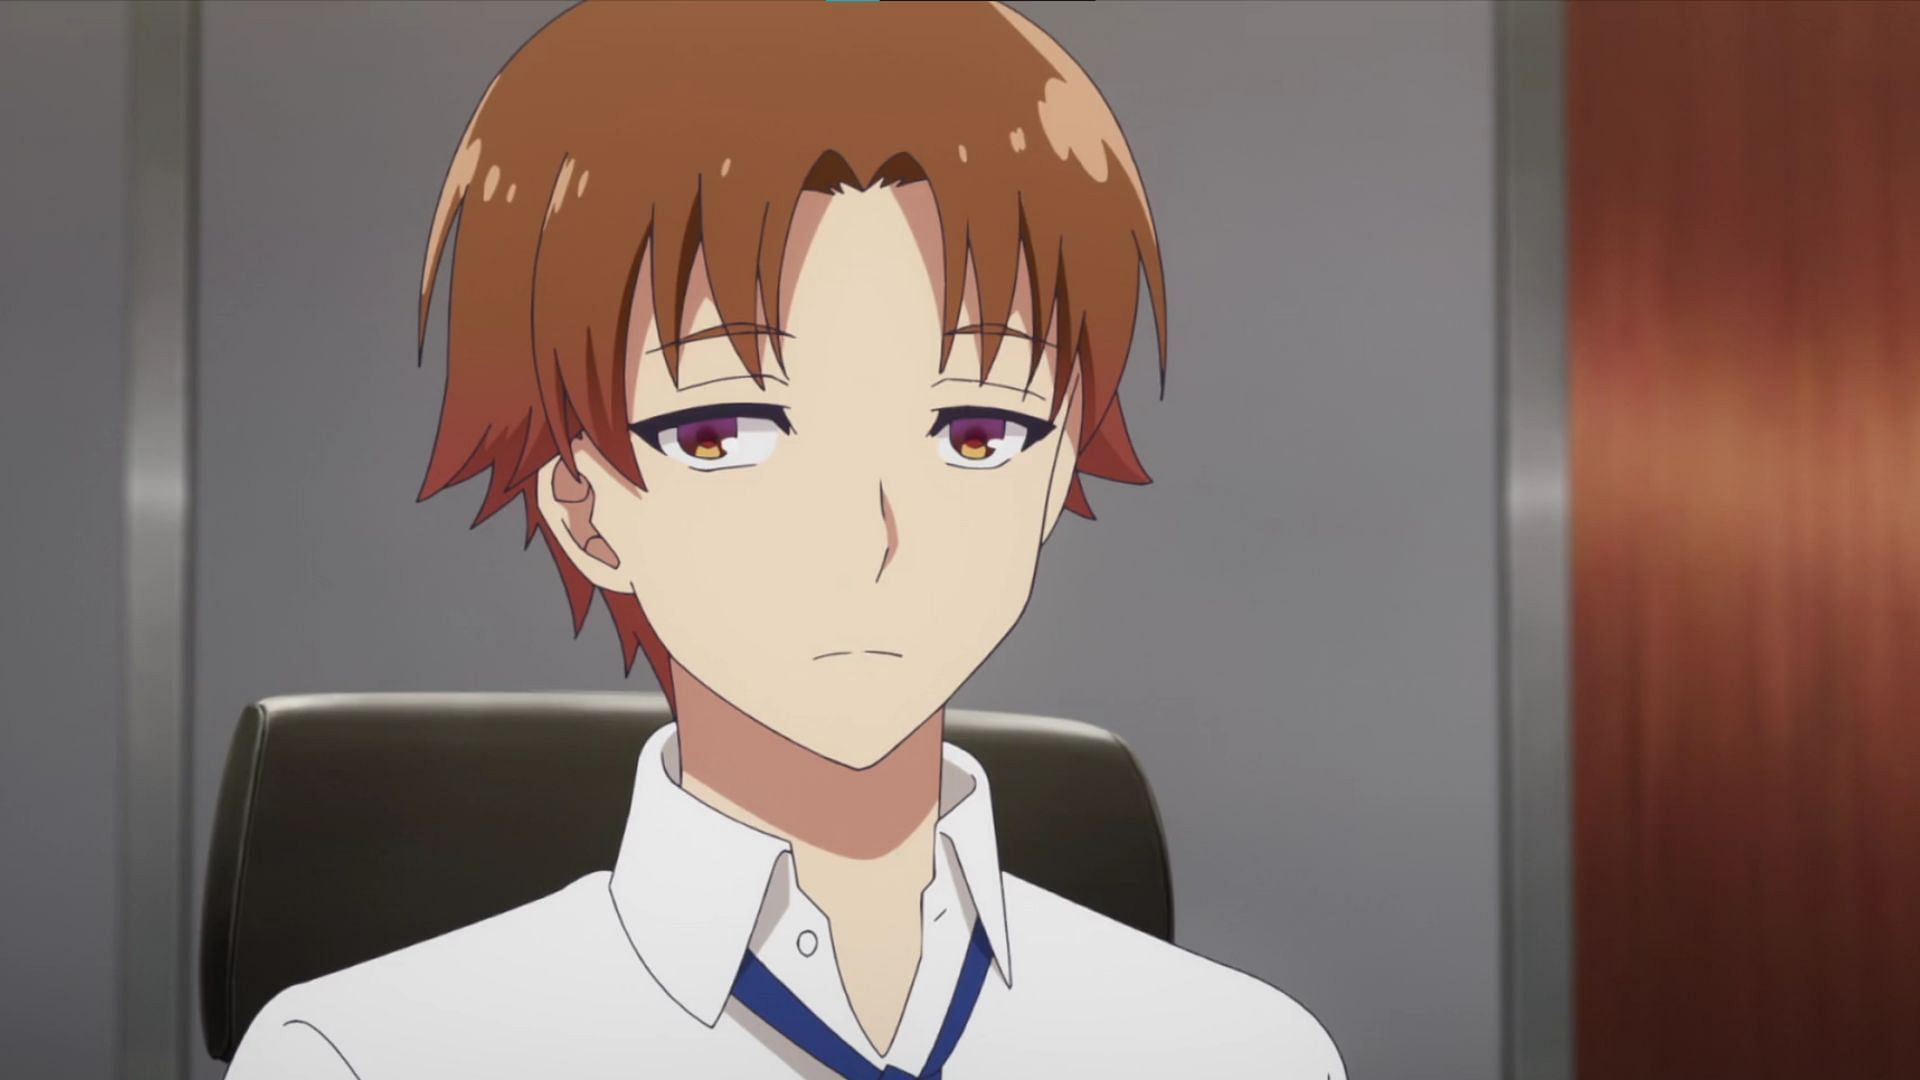 Ayanokoji as shown in the anime (Image via Studio Lerche)